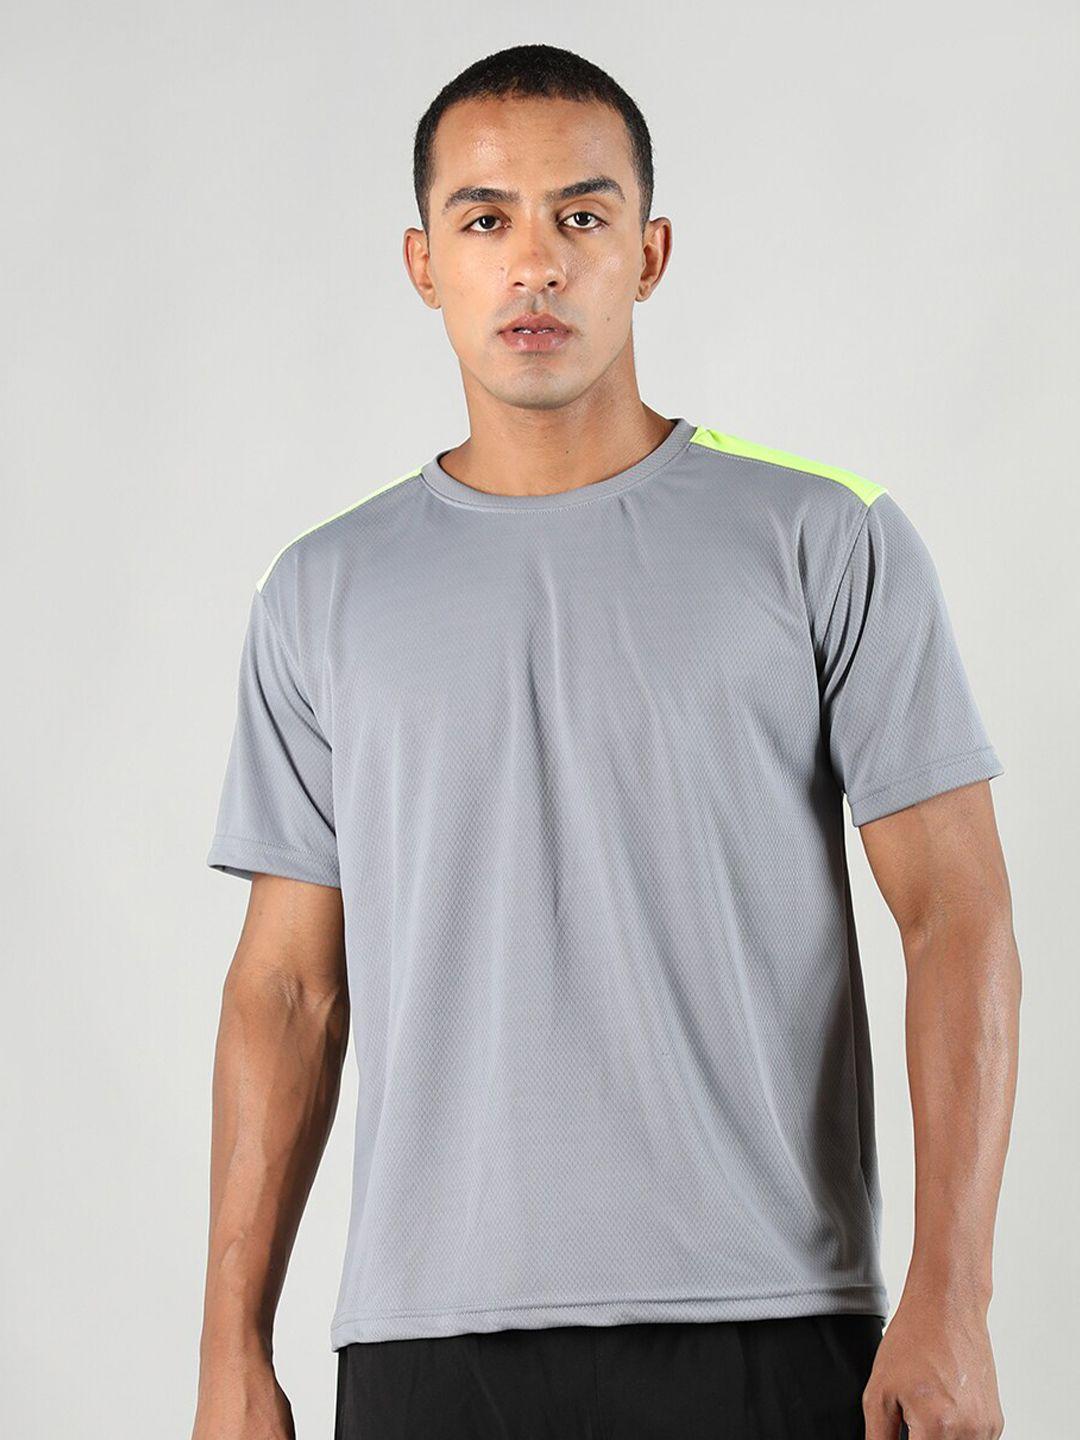 chkokko raglan sleeves sports t-shirt